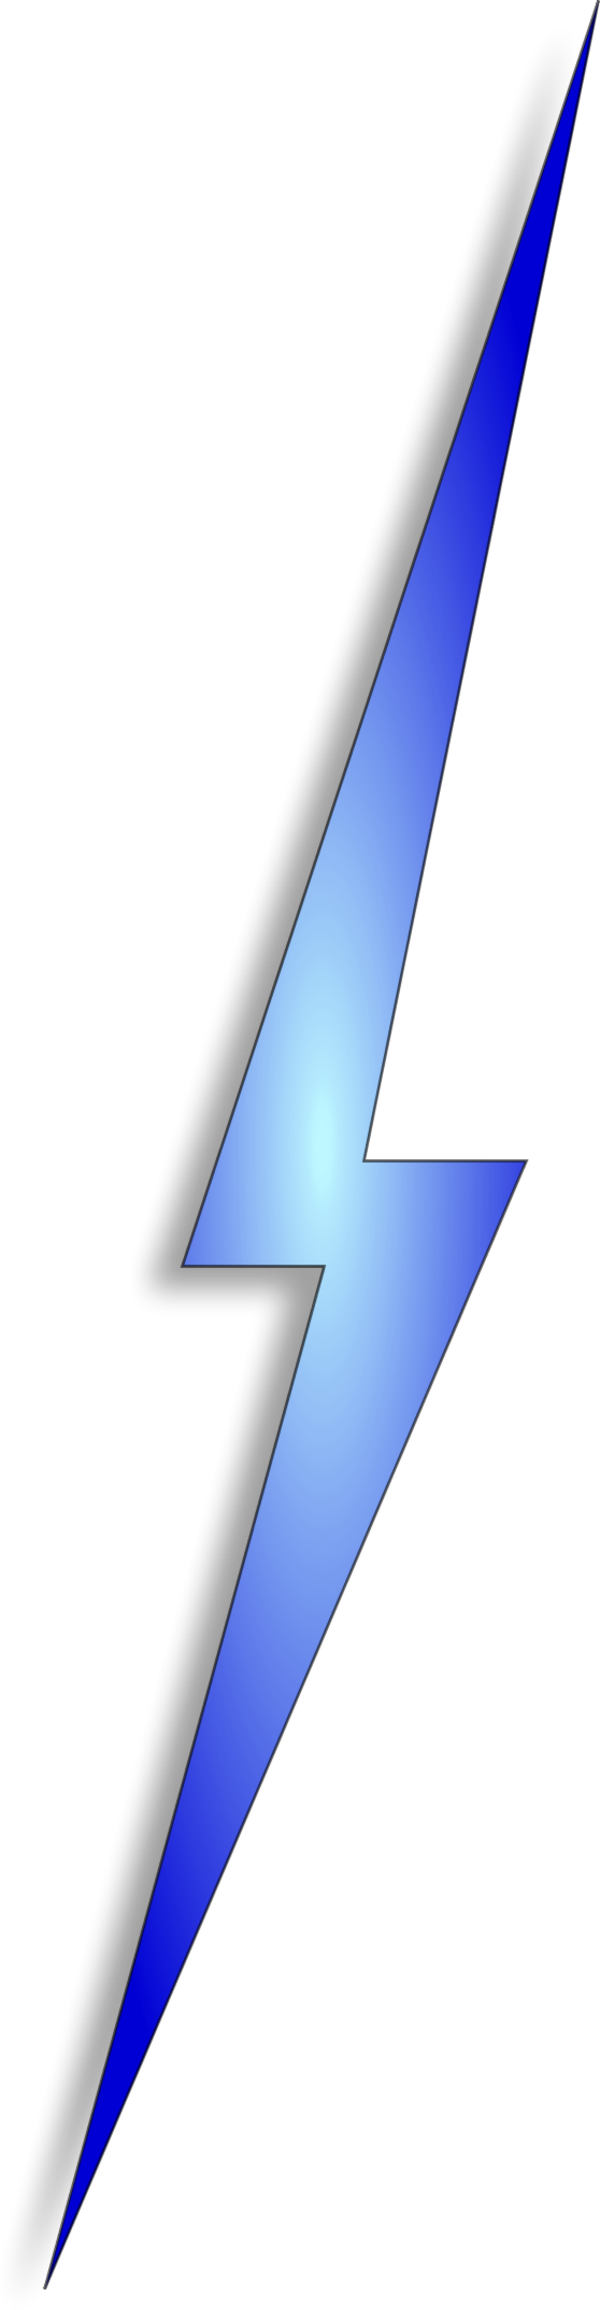 Thunderbolt Clipart - Blue Lightning Bolt Clipart (600x2310)